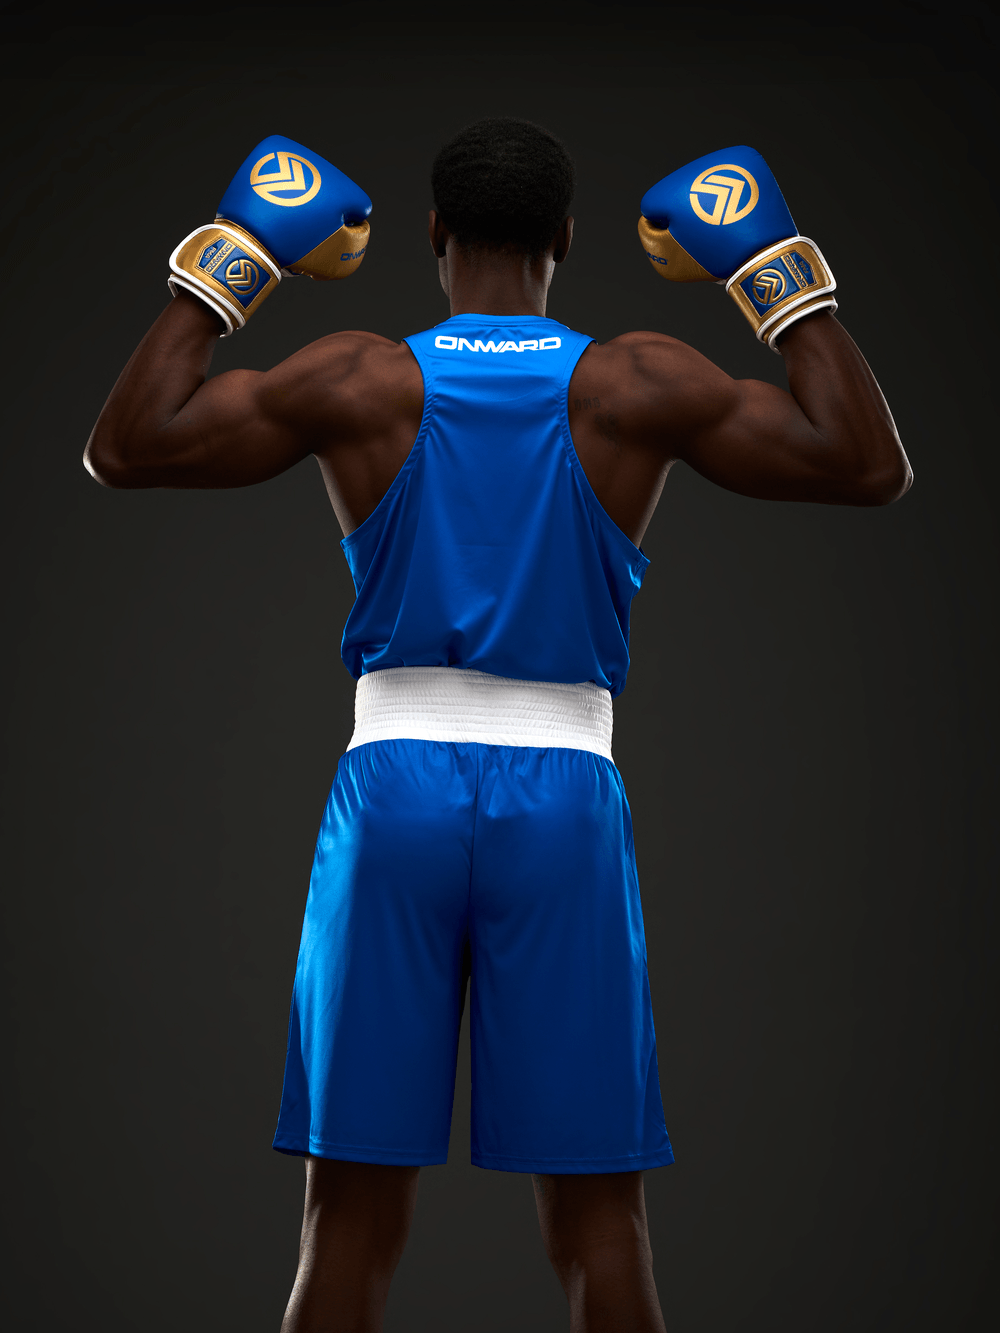 Mens Competition Boxing Singlet - Racer Back - Onward Online - 1AH001-600-XS